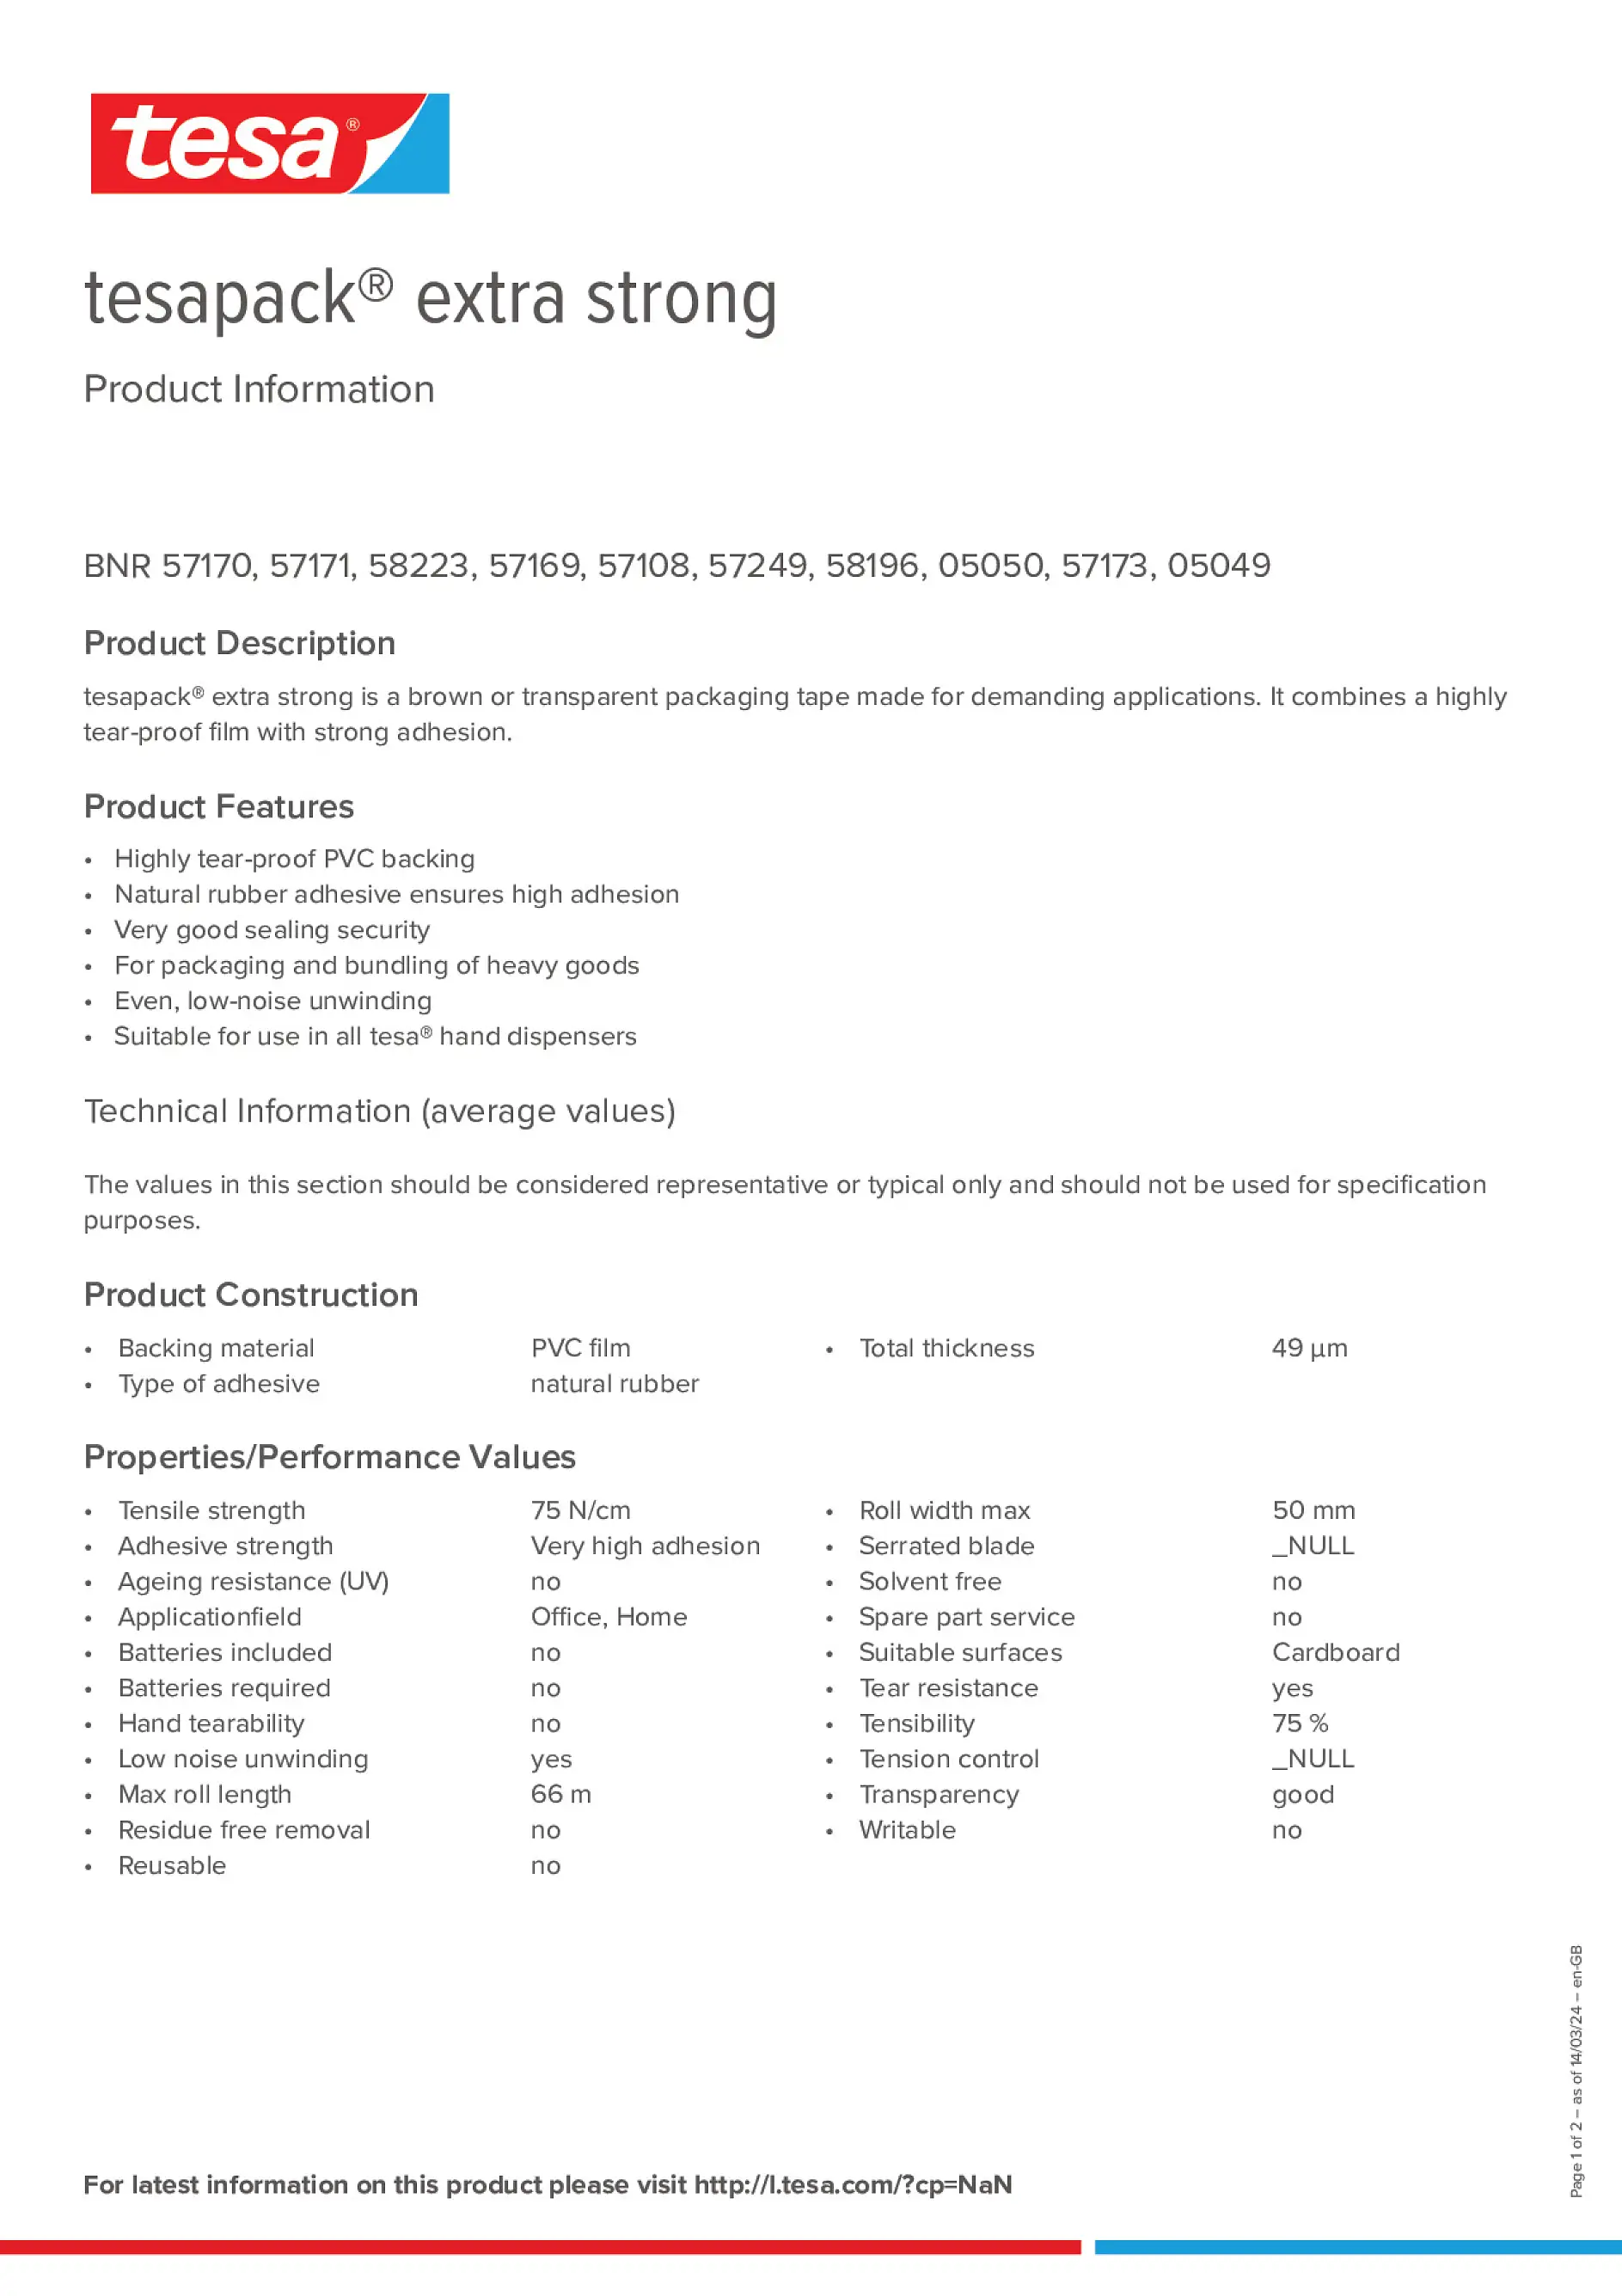 Product information_tesapack® 57249_en-GB